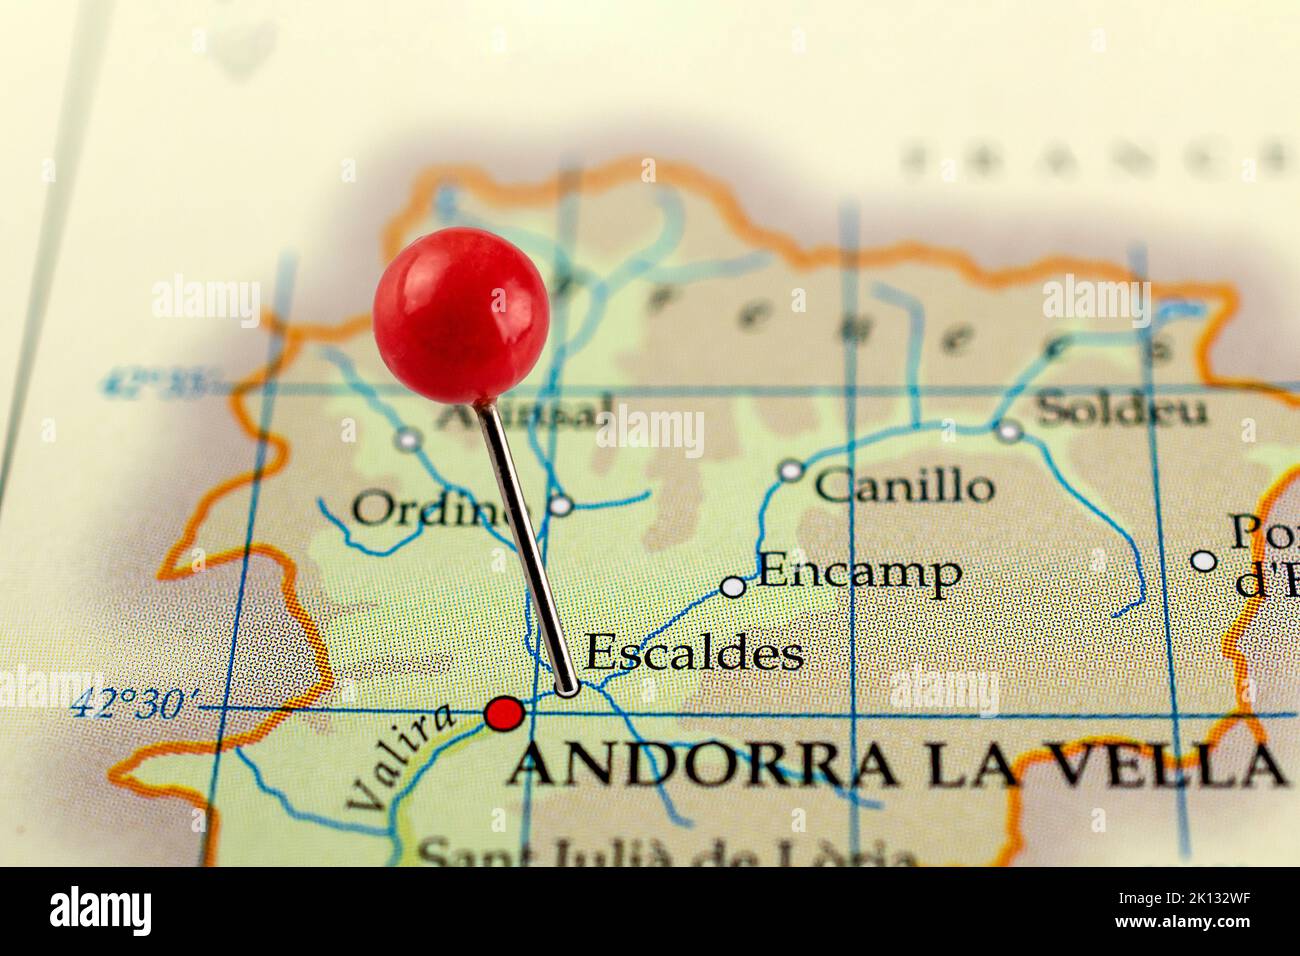 Escaldes map. Close up of Les Escaldes map with red pin. Map with red pin point of Escaldes in Andorra. Stock Photo